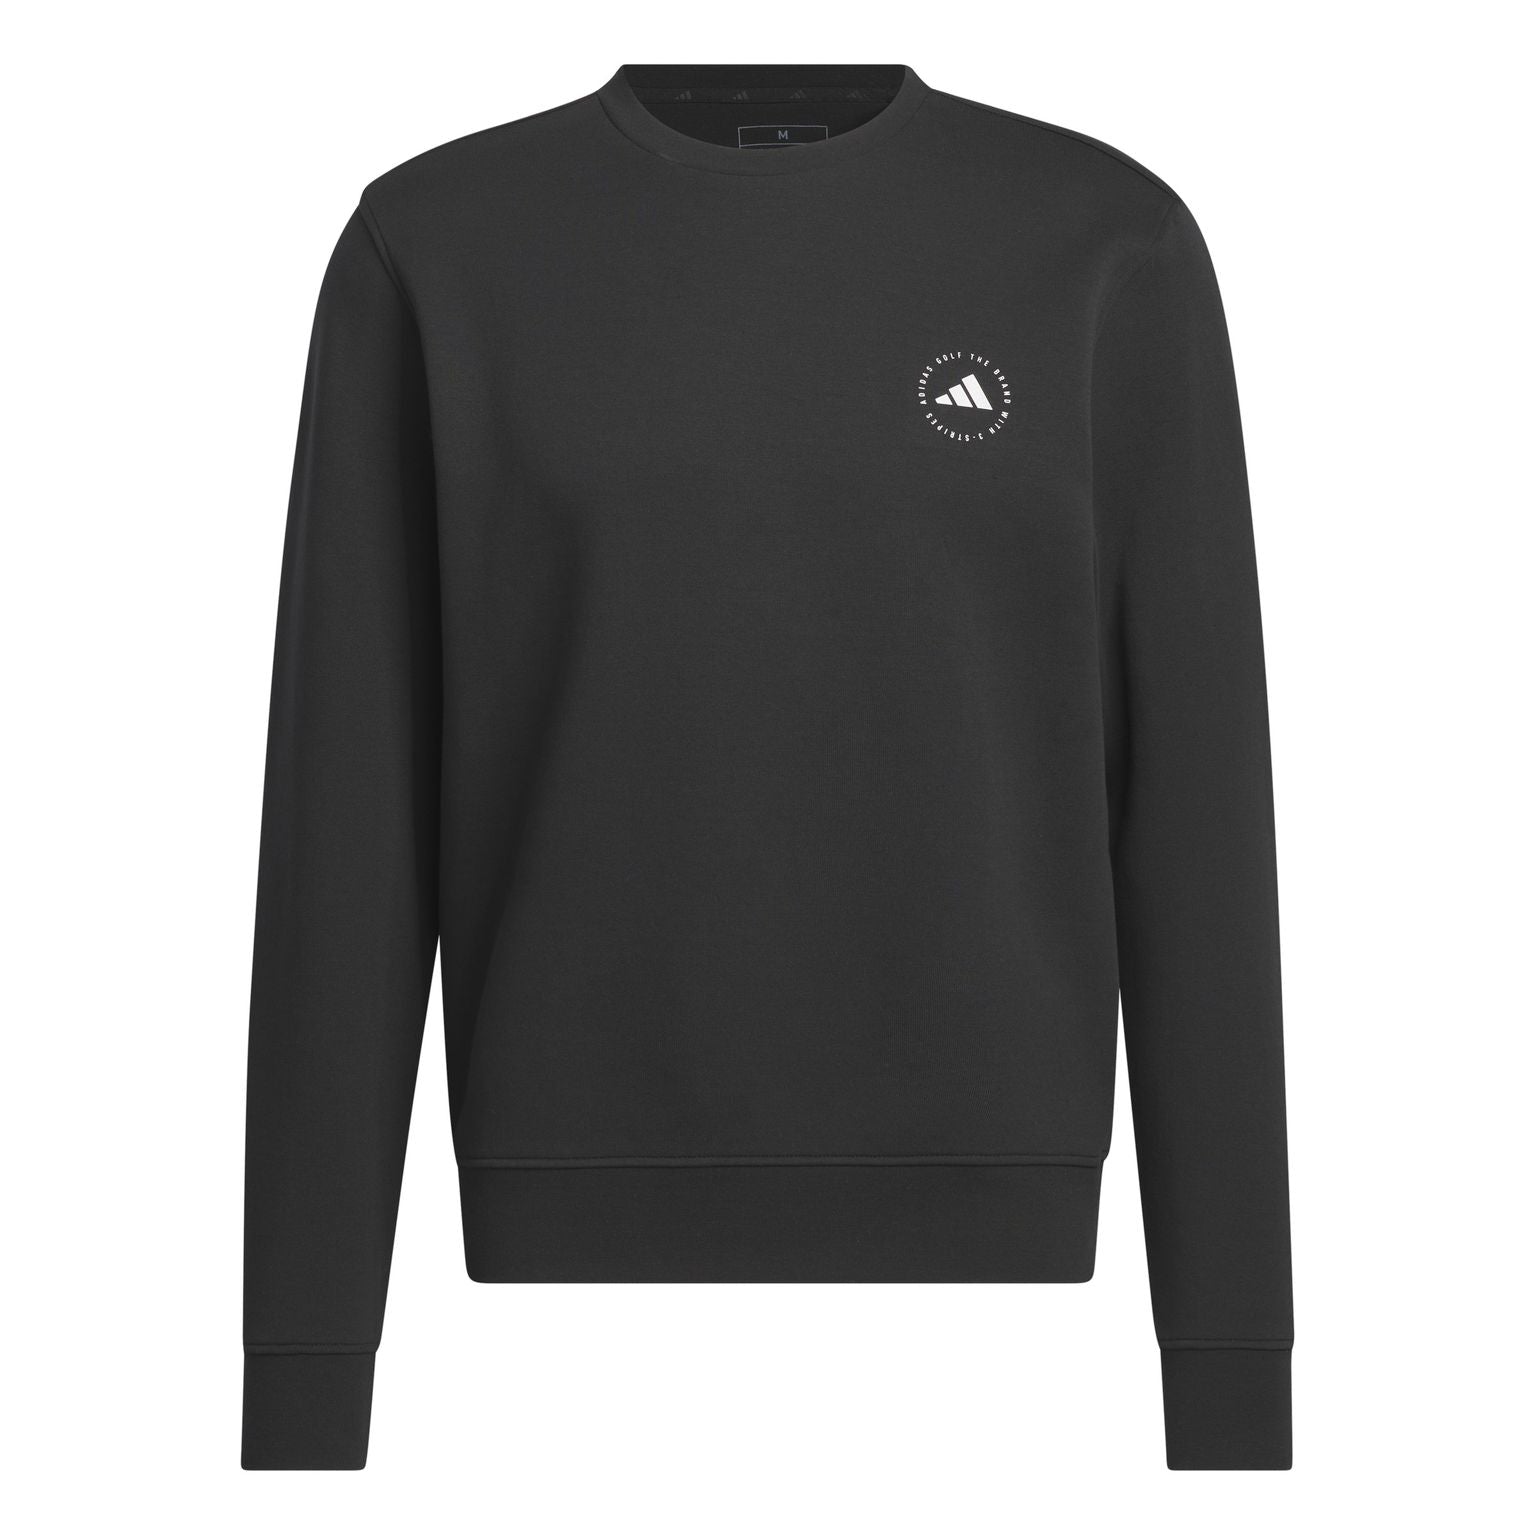 Adidas Men's Crewneck Sweatshirt